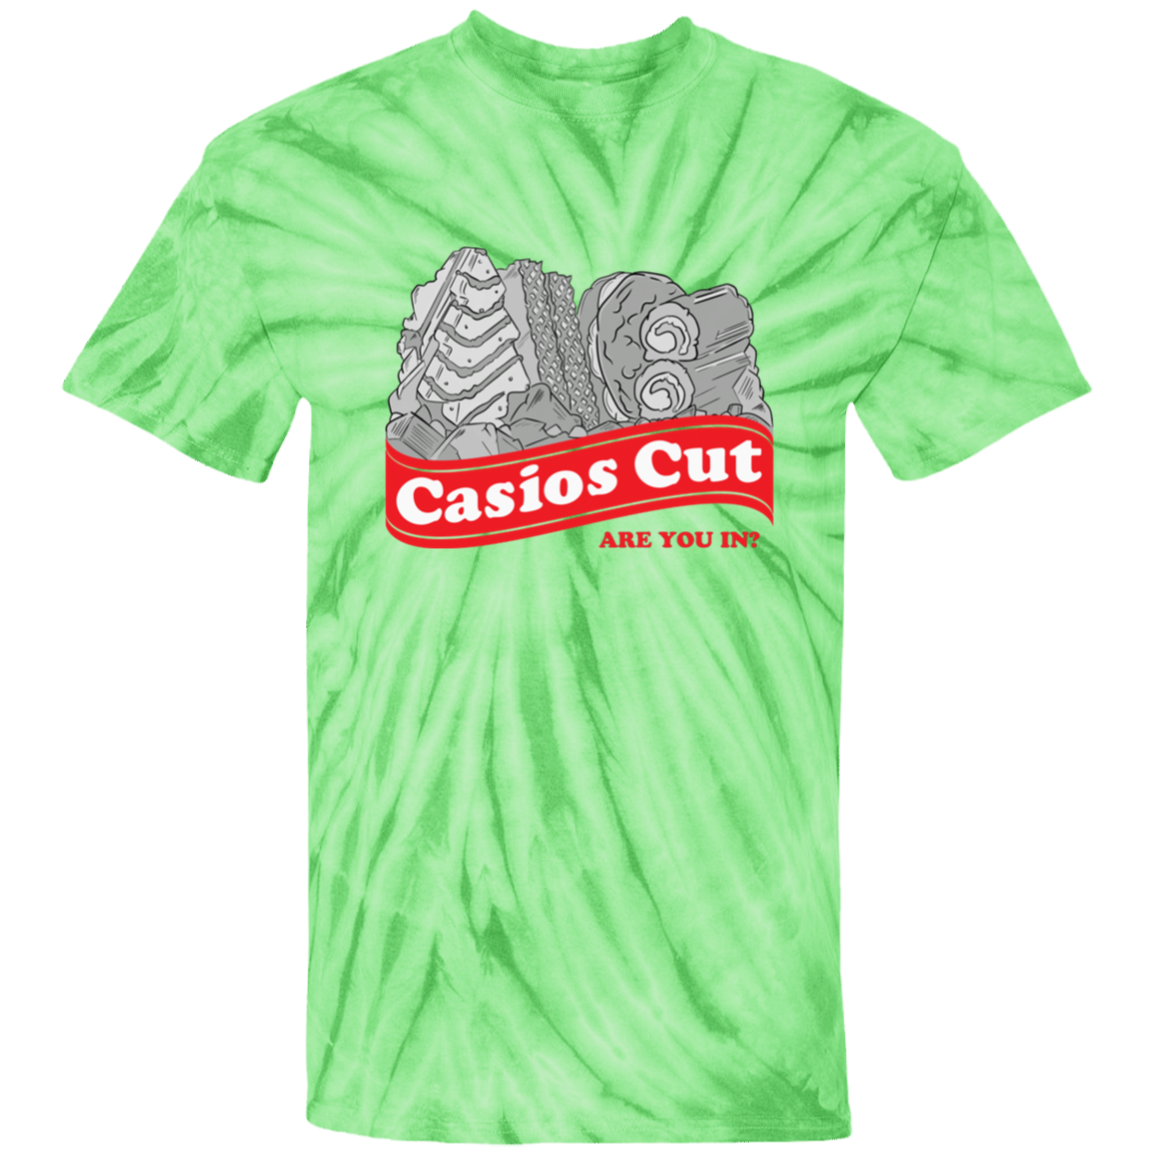 RUSHMORE 100% Cotton Tie Dye T-Shirt